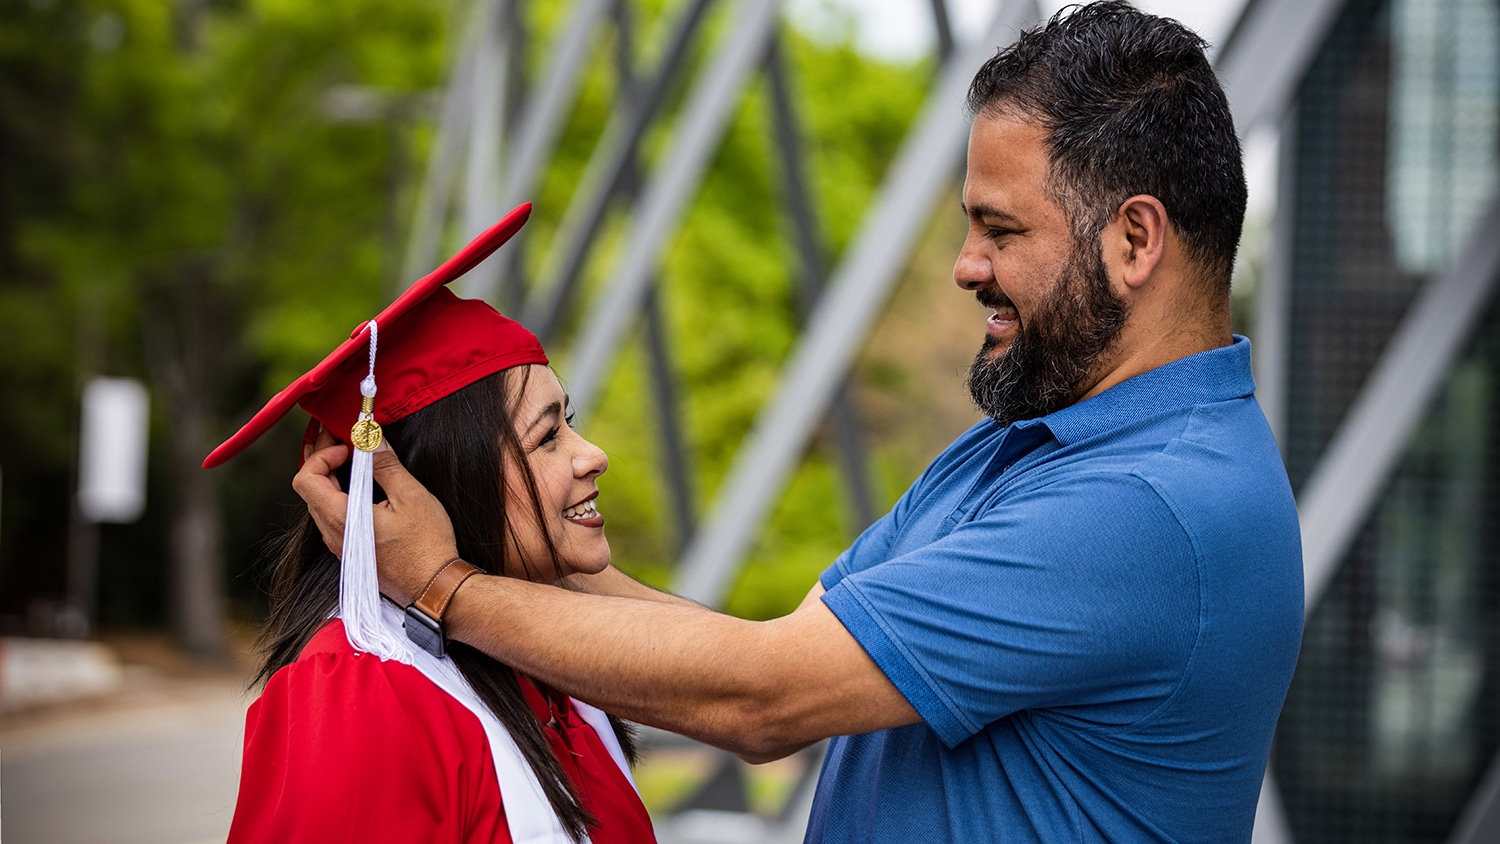 A man helps adjust the graduation cap on his partner's head.